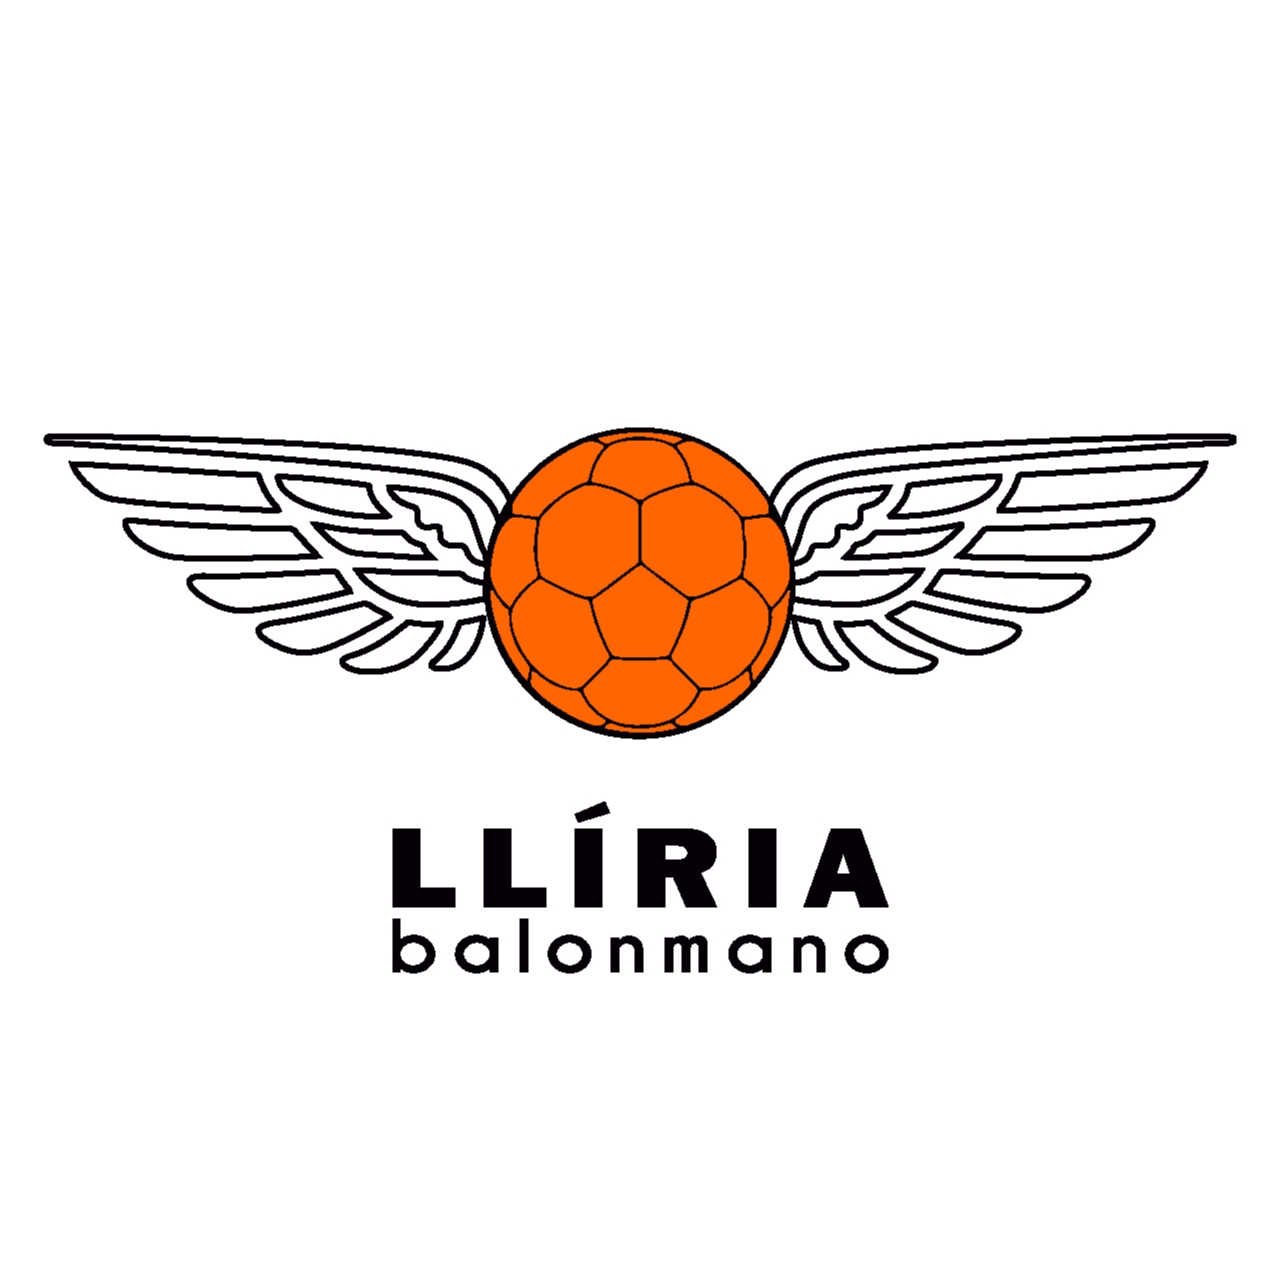 CLUB BALONMANO LLÃRIA